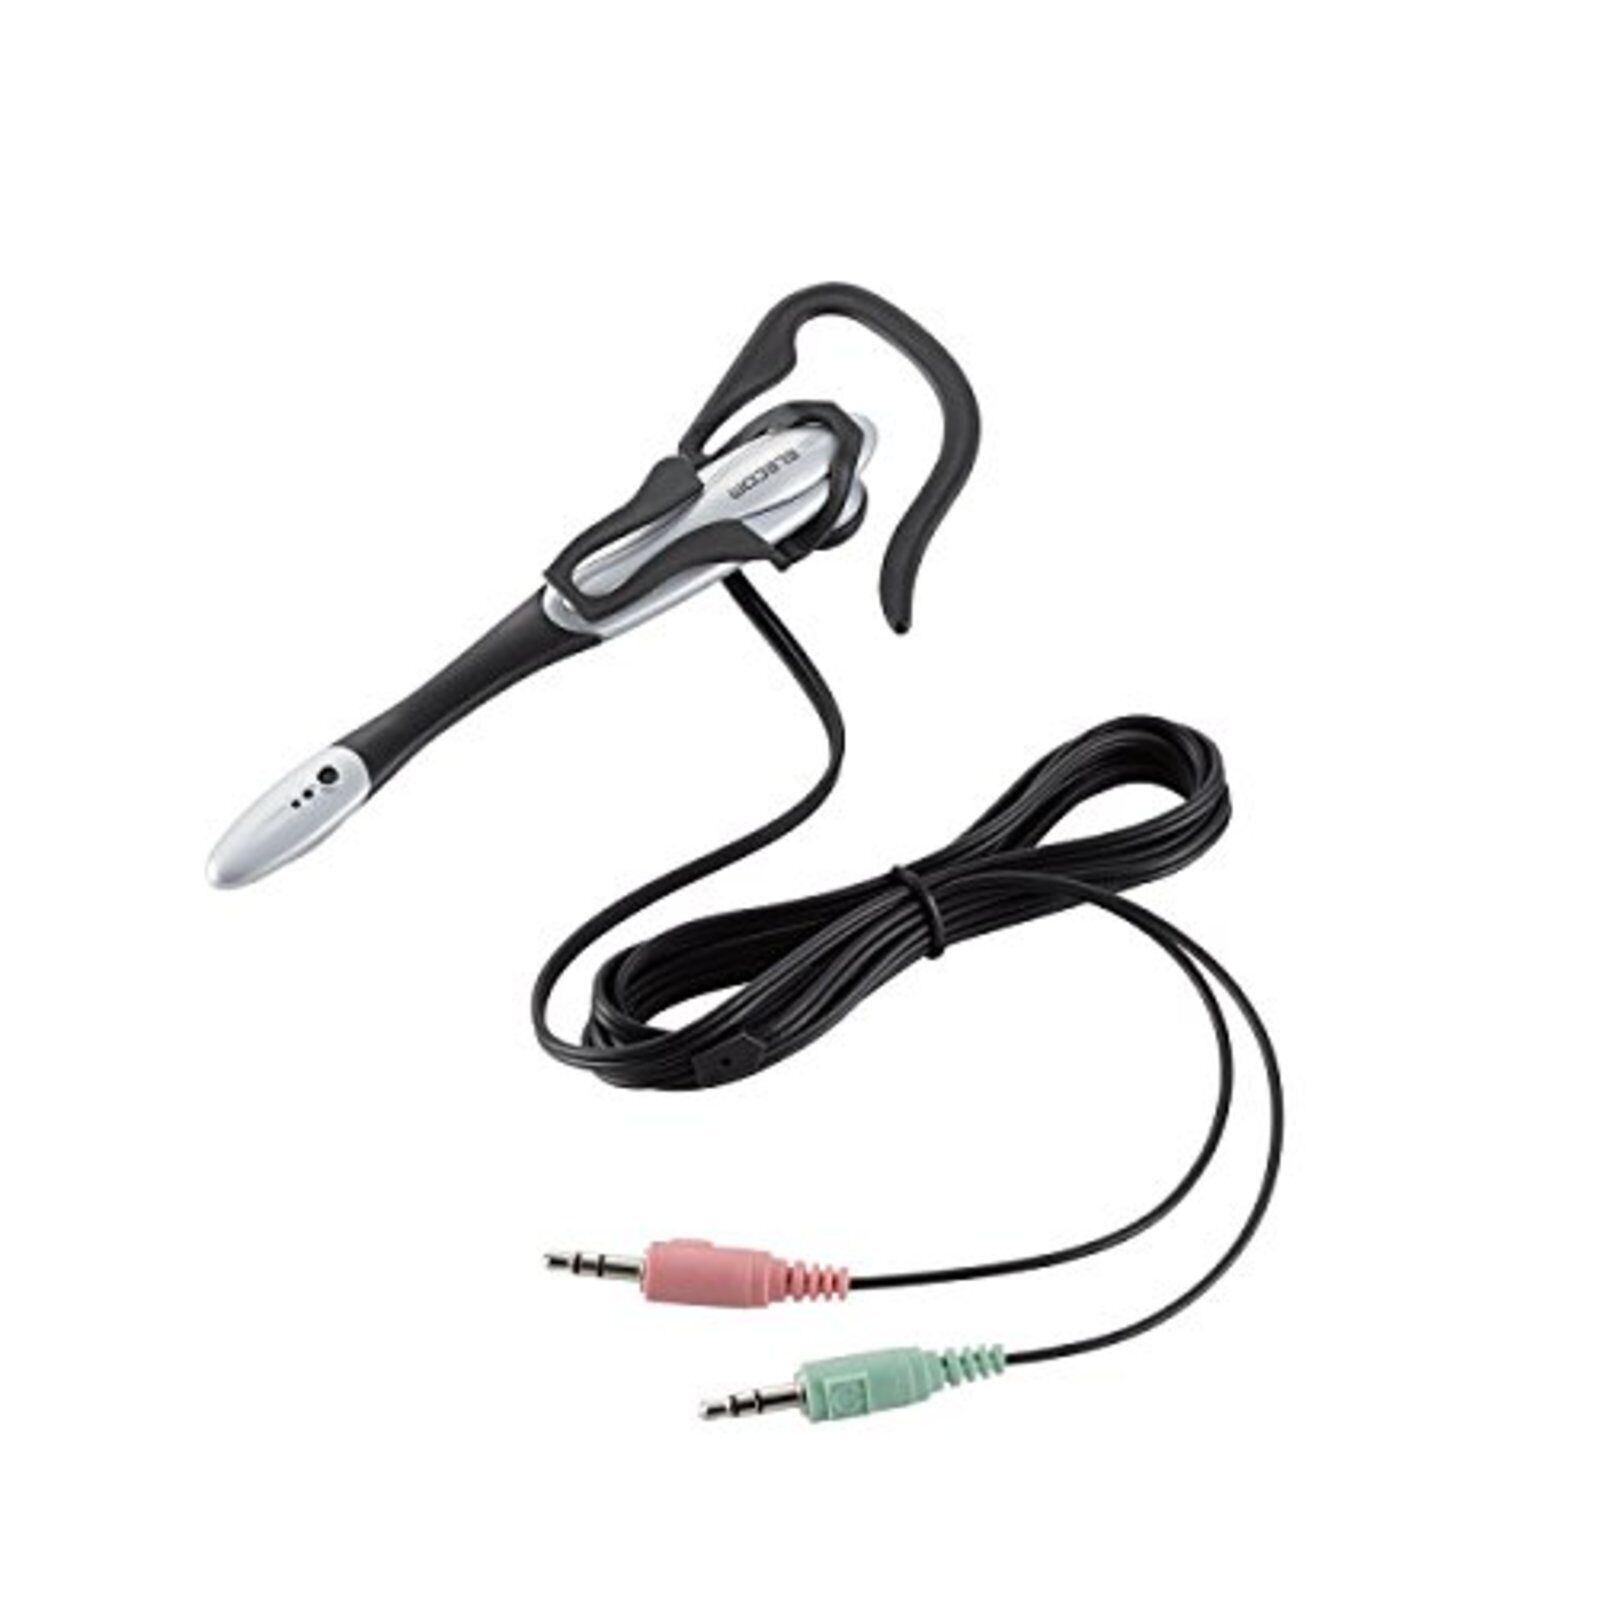 Elecom headset microphone ear ear hook 1.8m HS-EP13SV F/S w/Tracking# Japan New